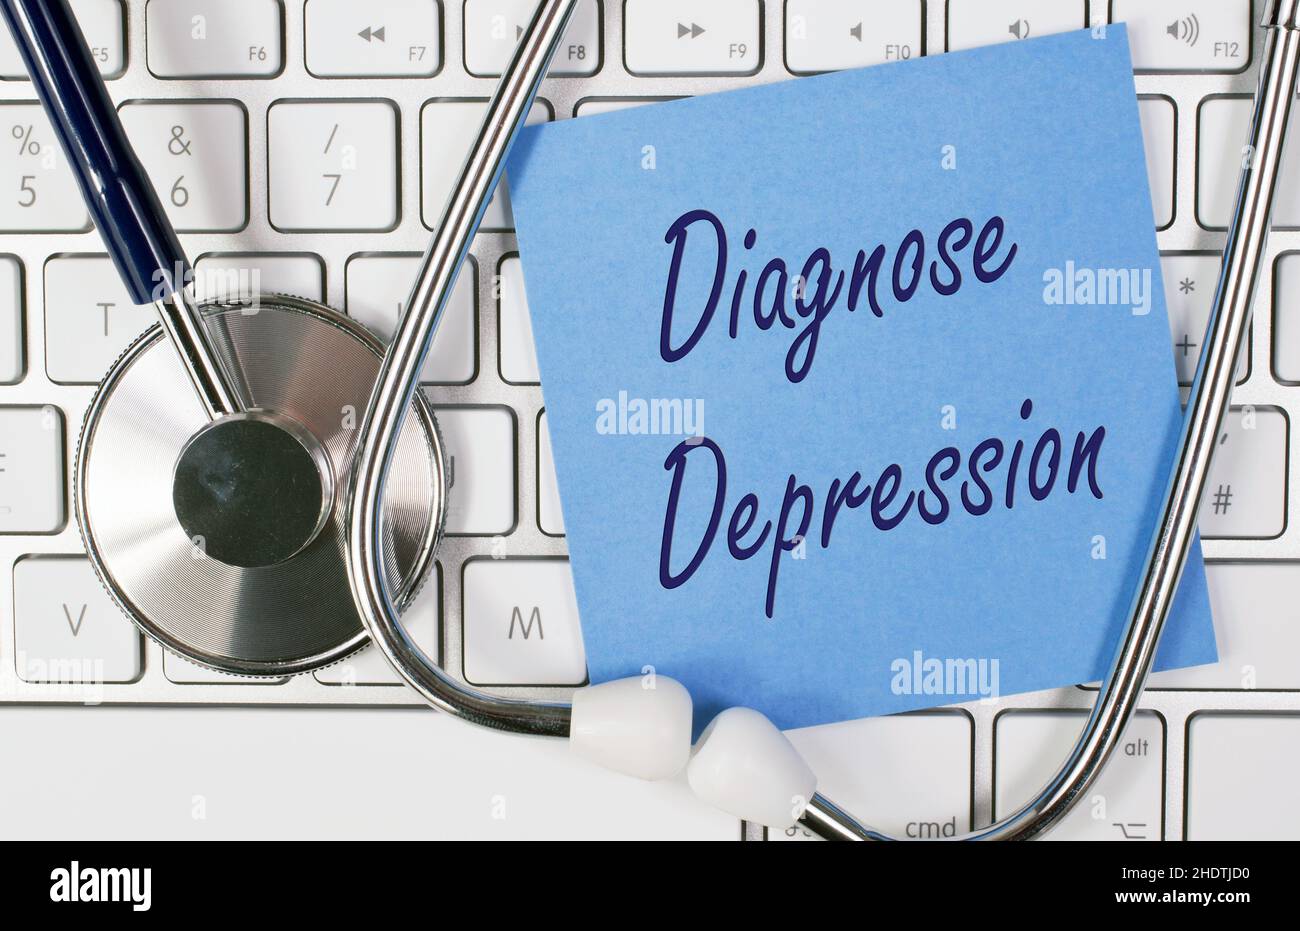 depression, depressions Stock Photo